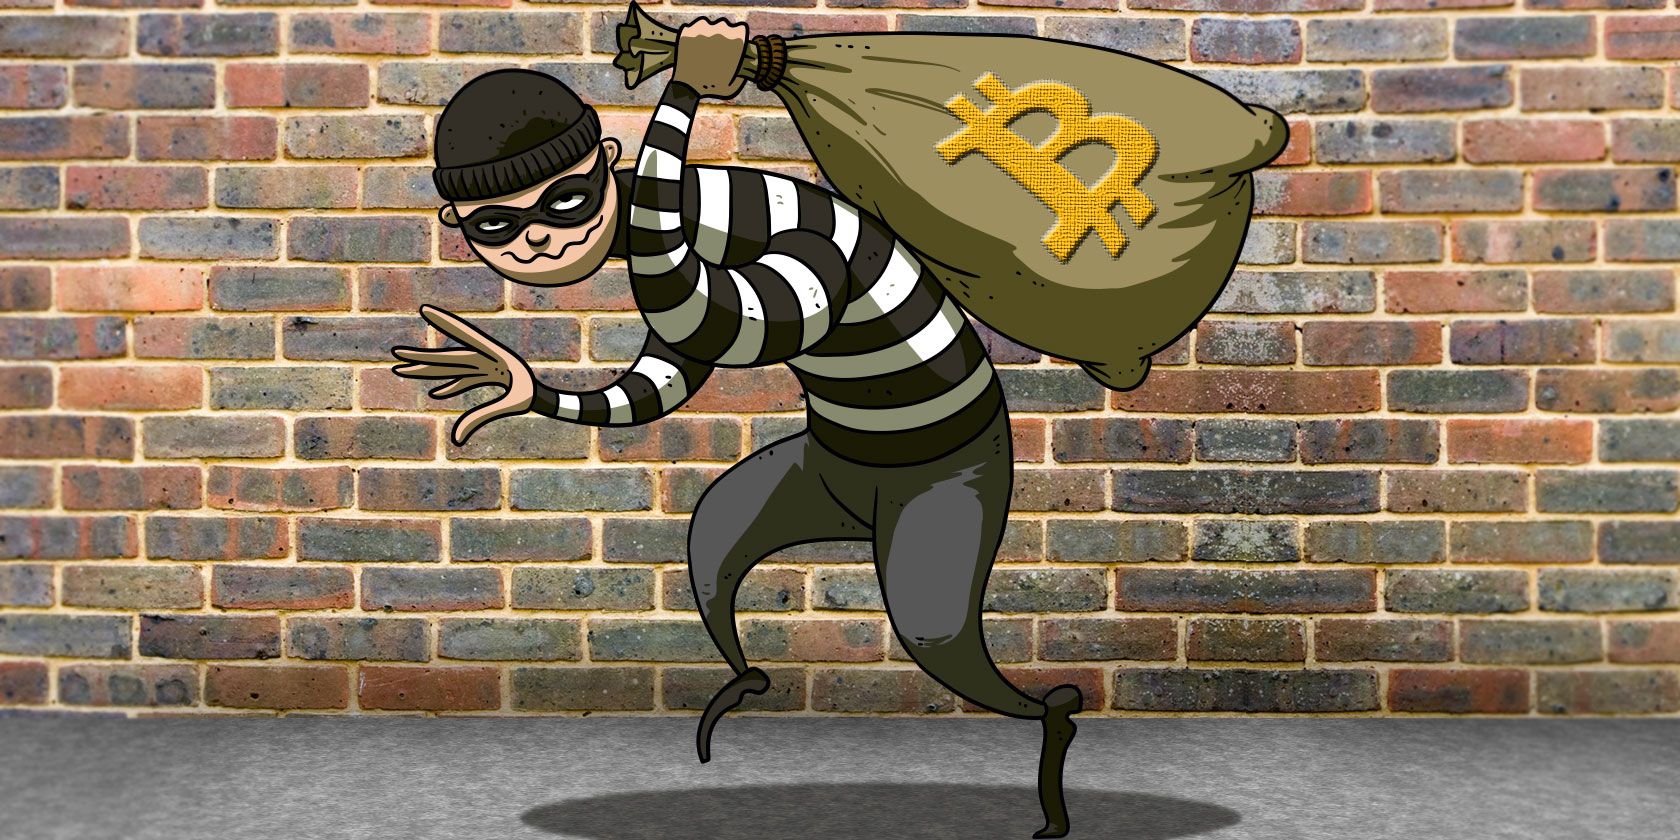 bitcoin thief caught